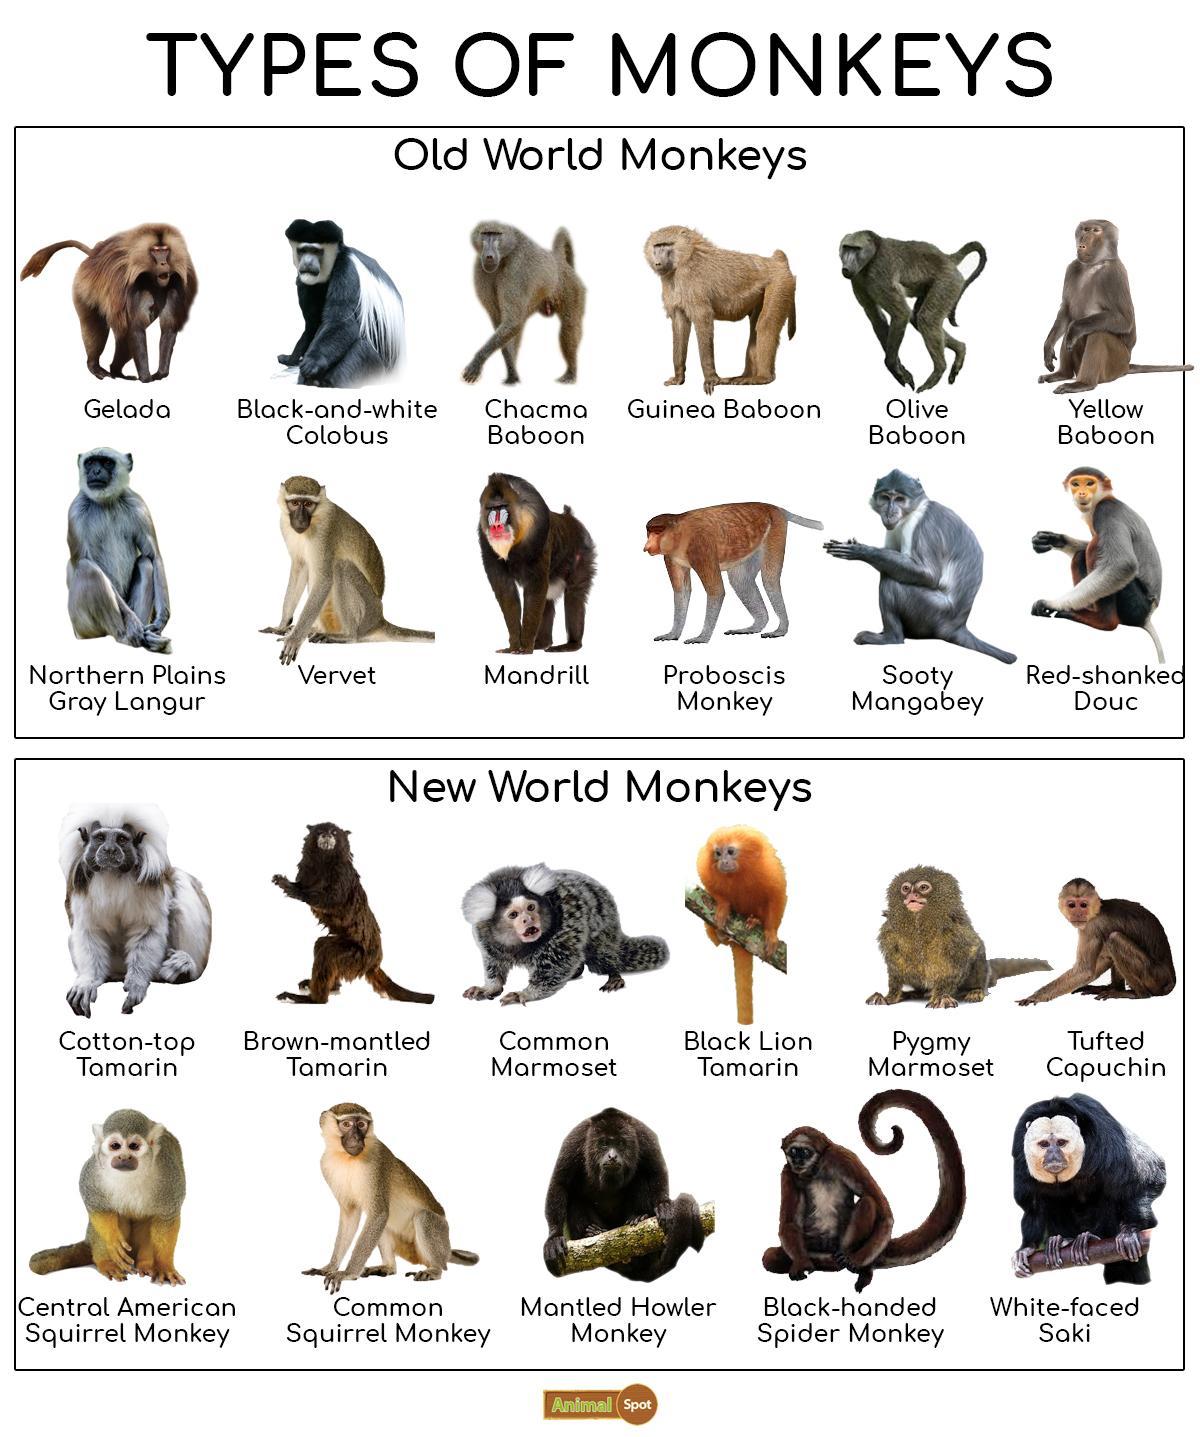 small monkey breeds